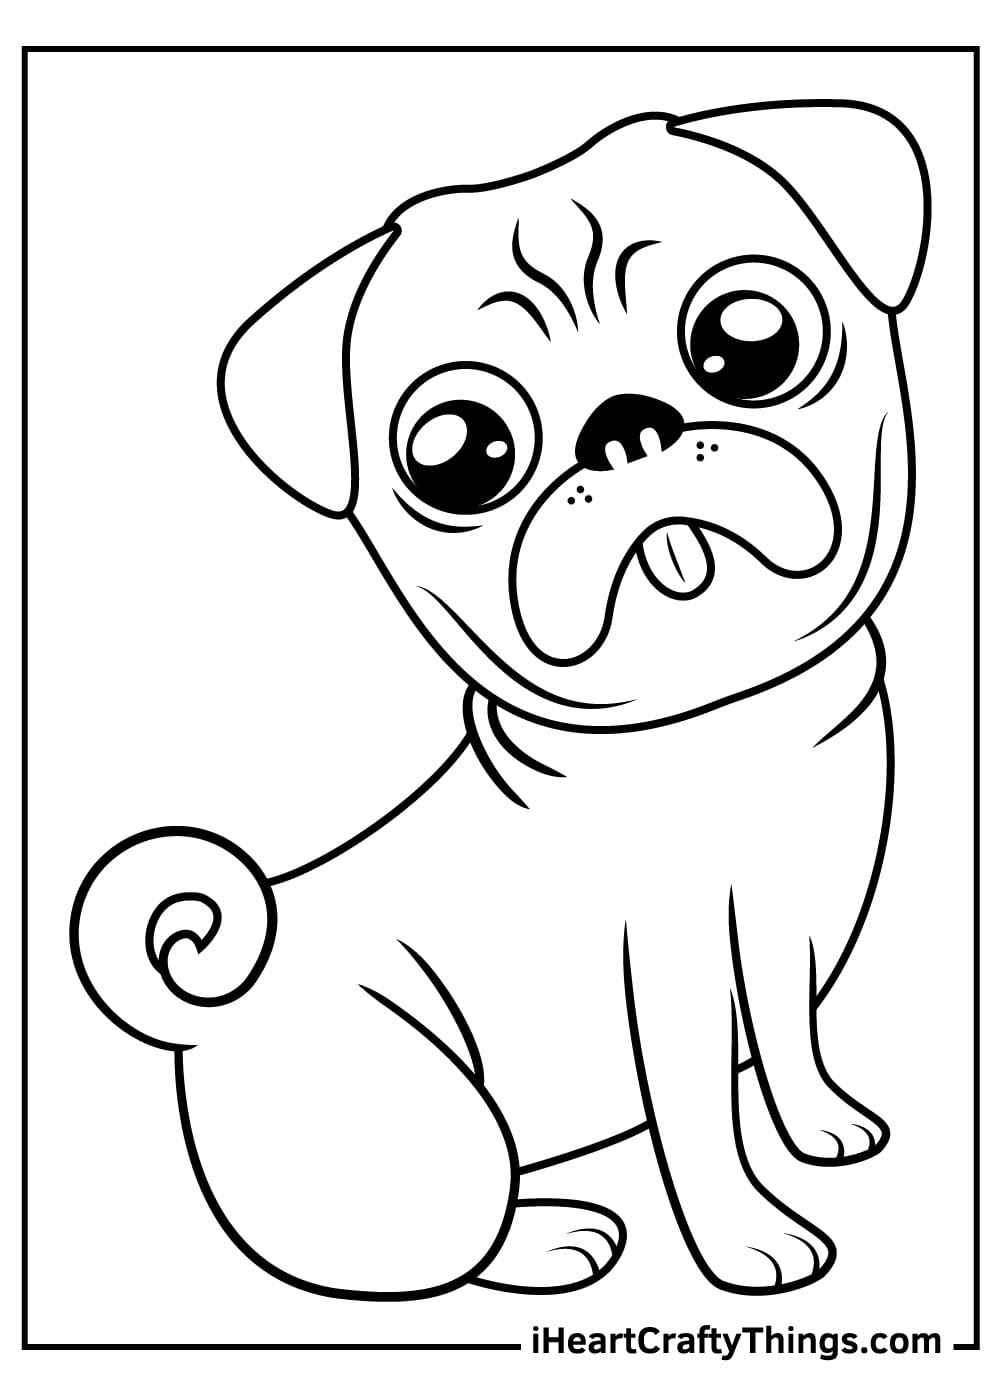 Pug Dog Free Coloring Page